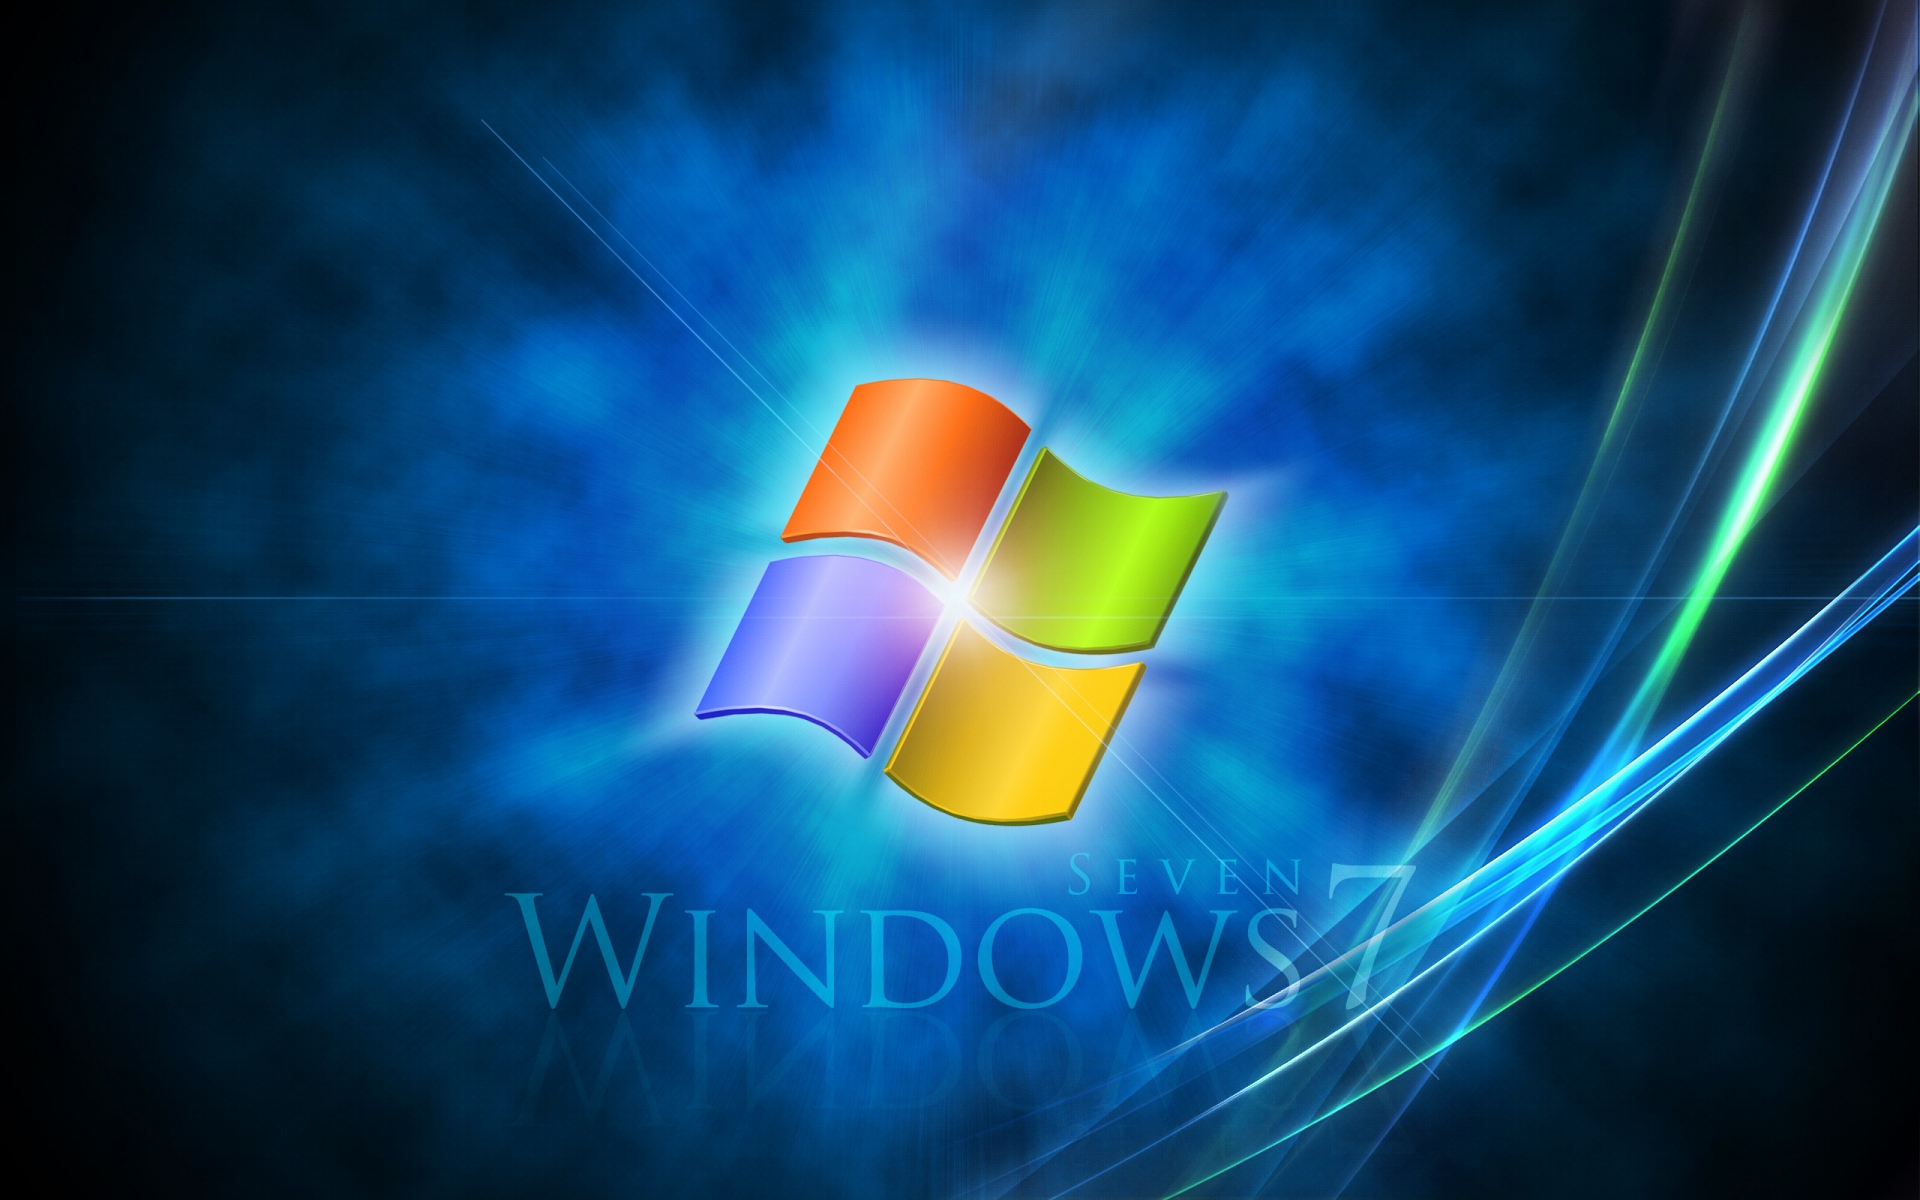 Windows 7 Light Rays for 1920 x 1200 widescreen resolution